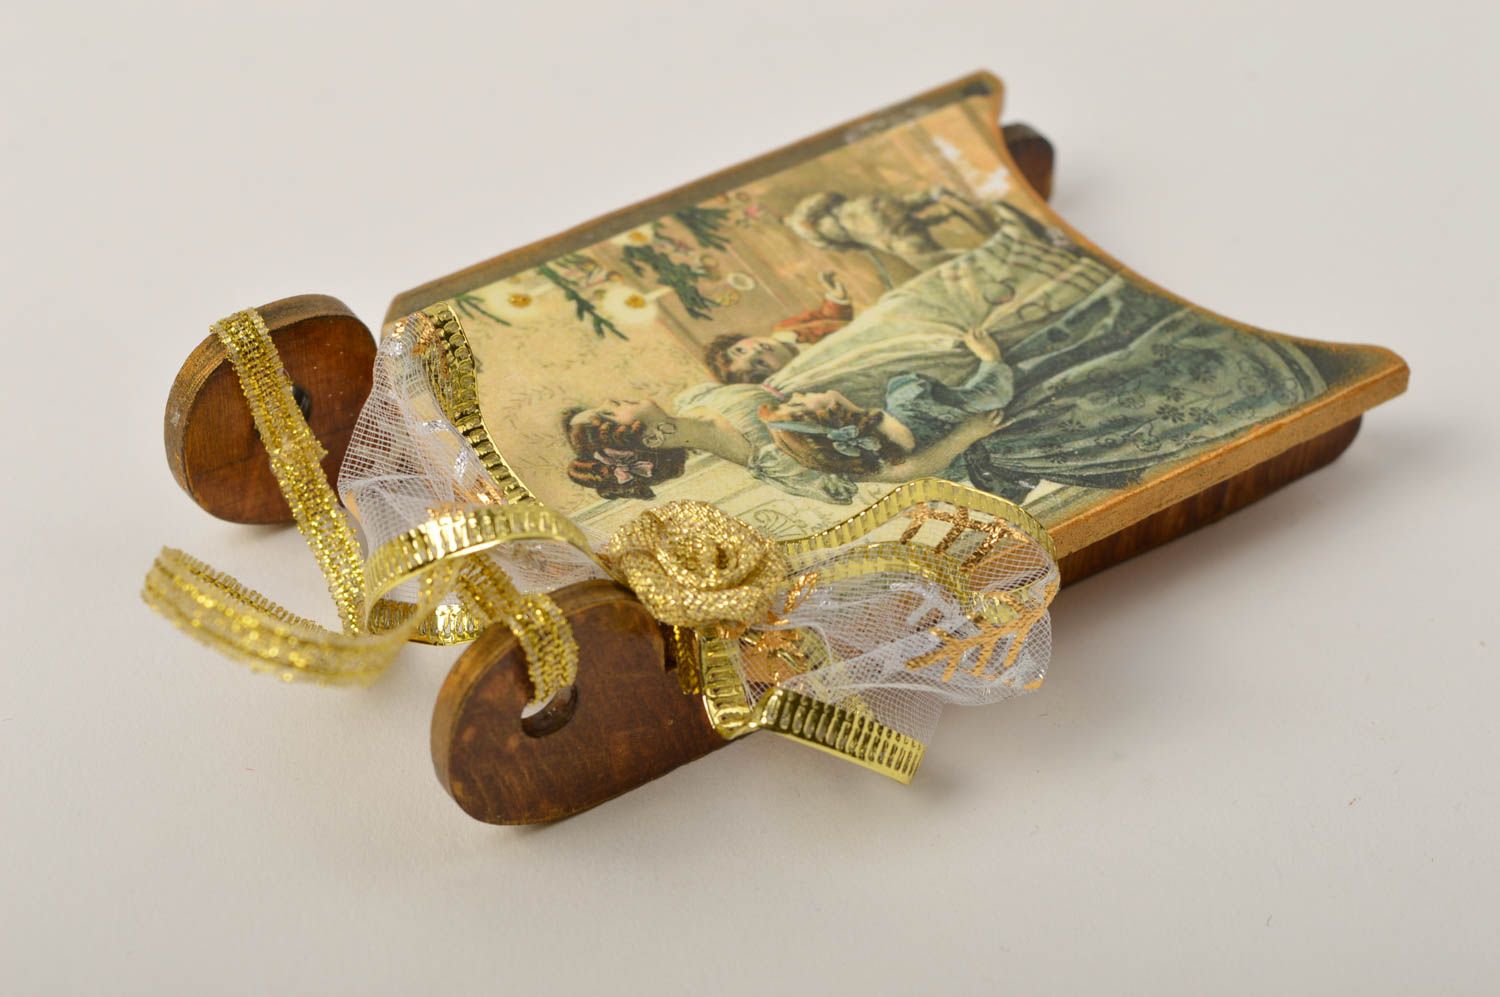 Adorno navideño hecho a mano de madera elemento decorativo souvenir original foto 2